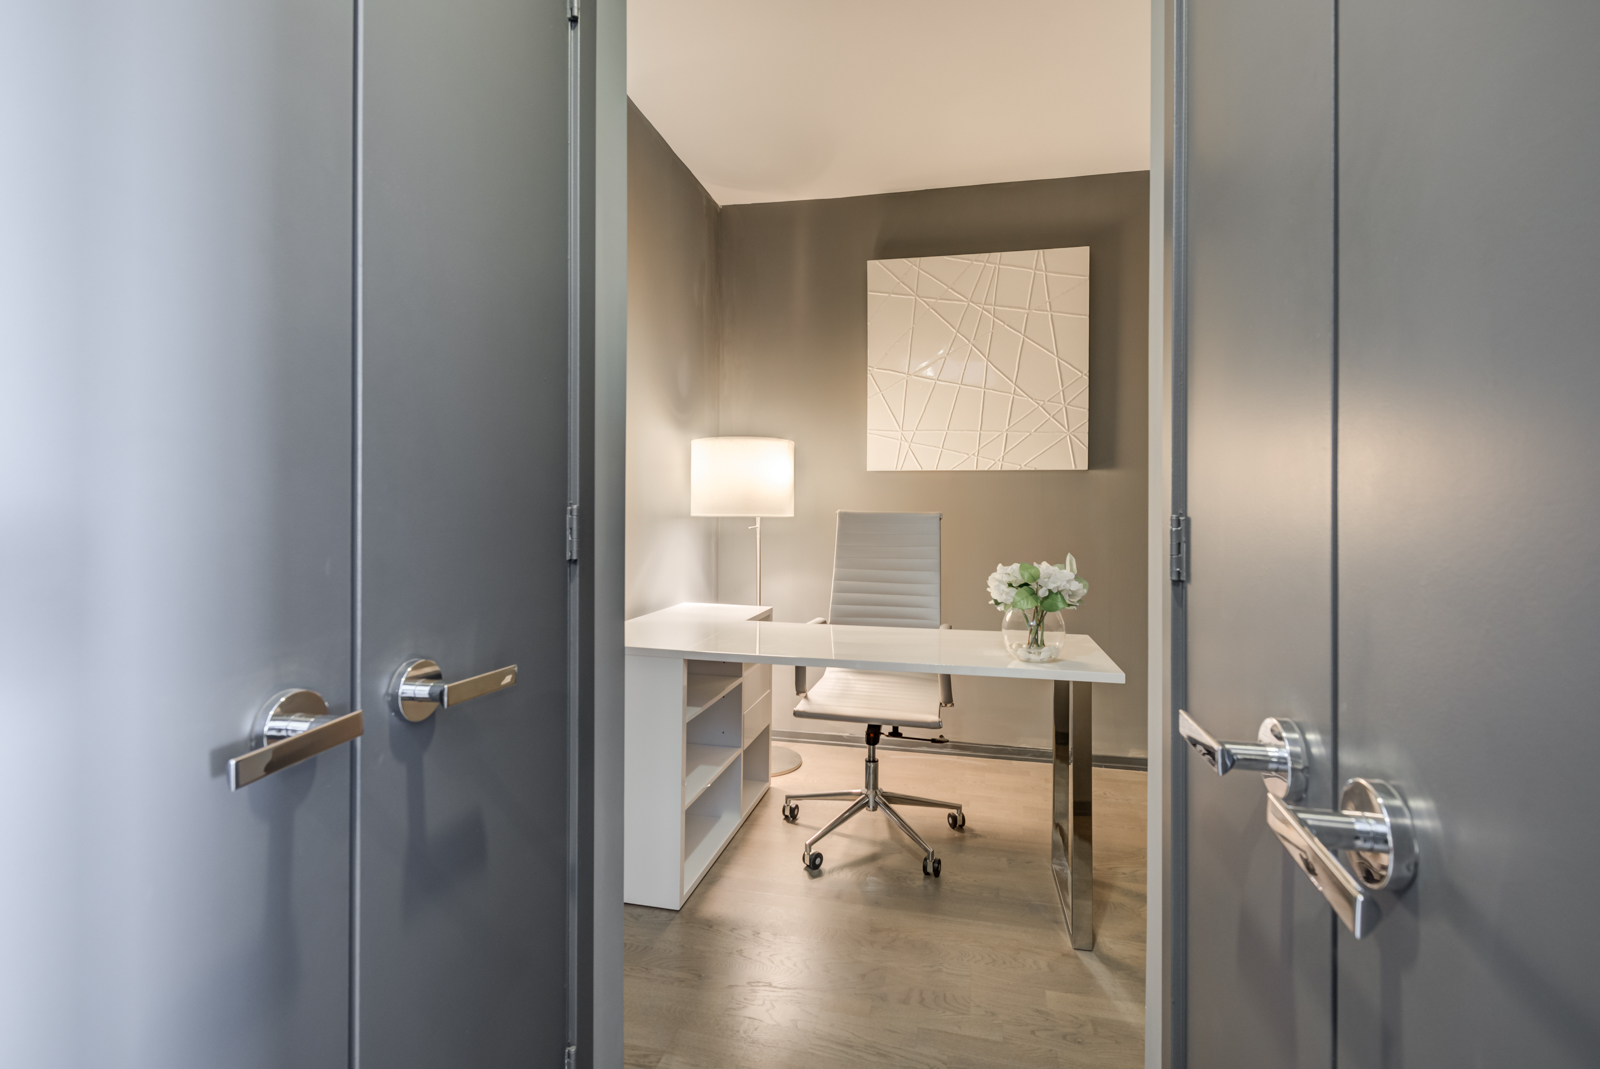 Den and office combo with view of closet door handle.